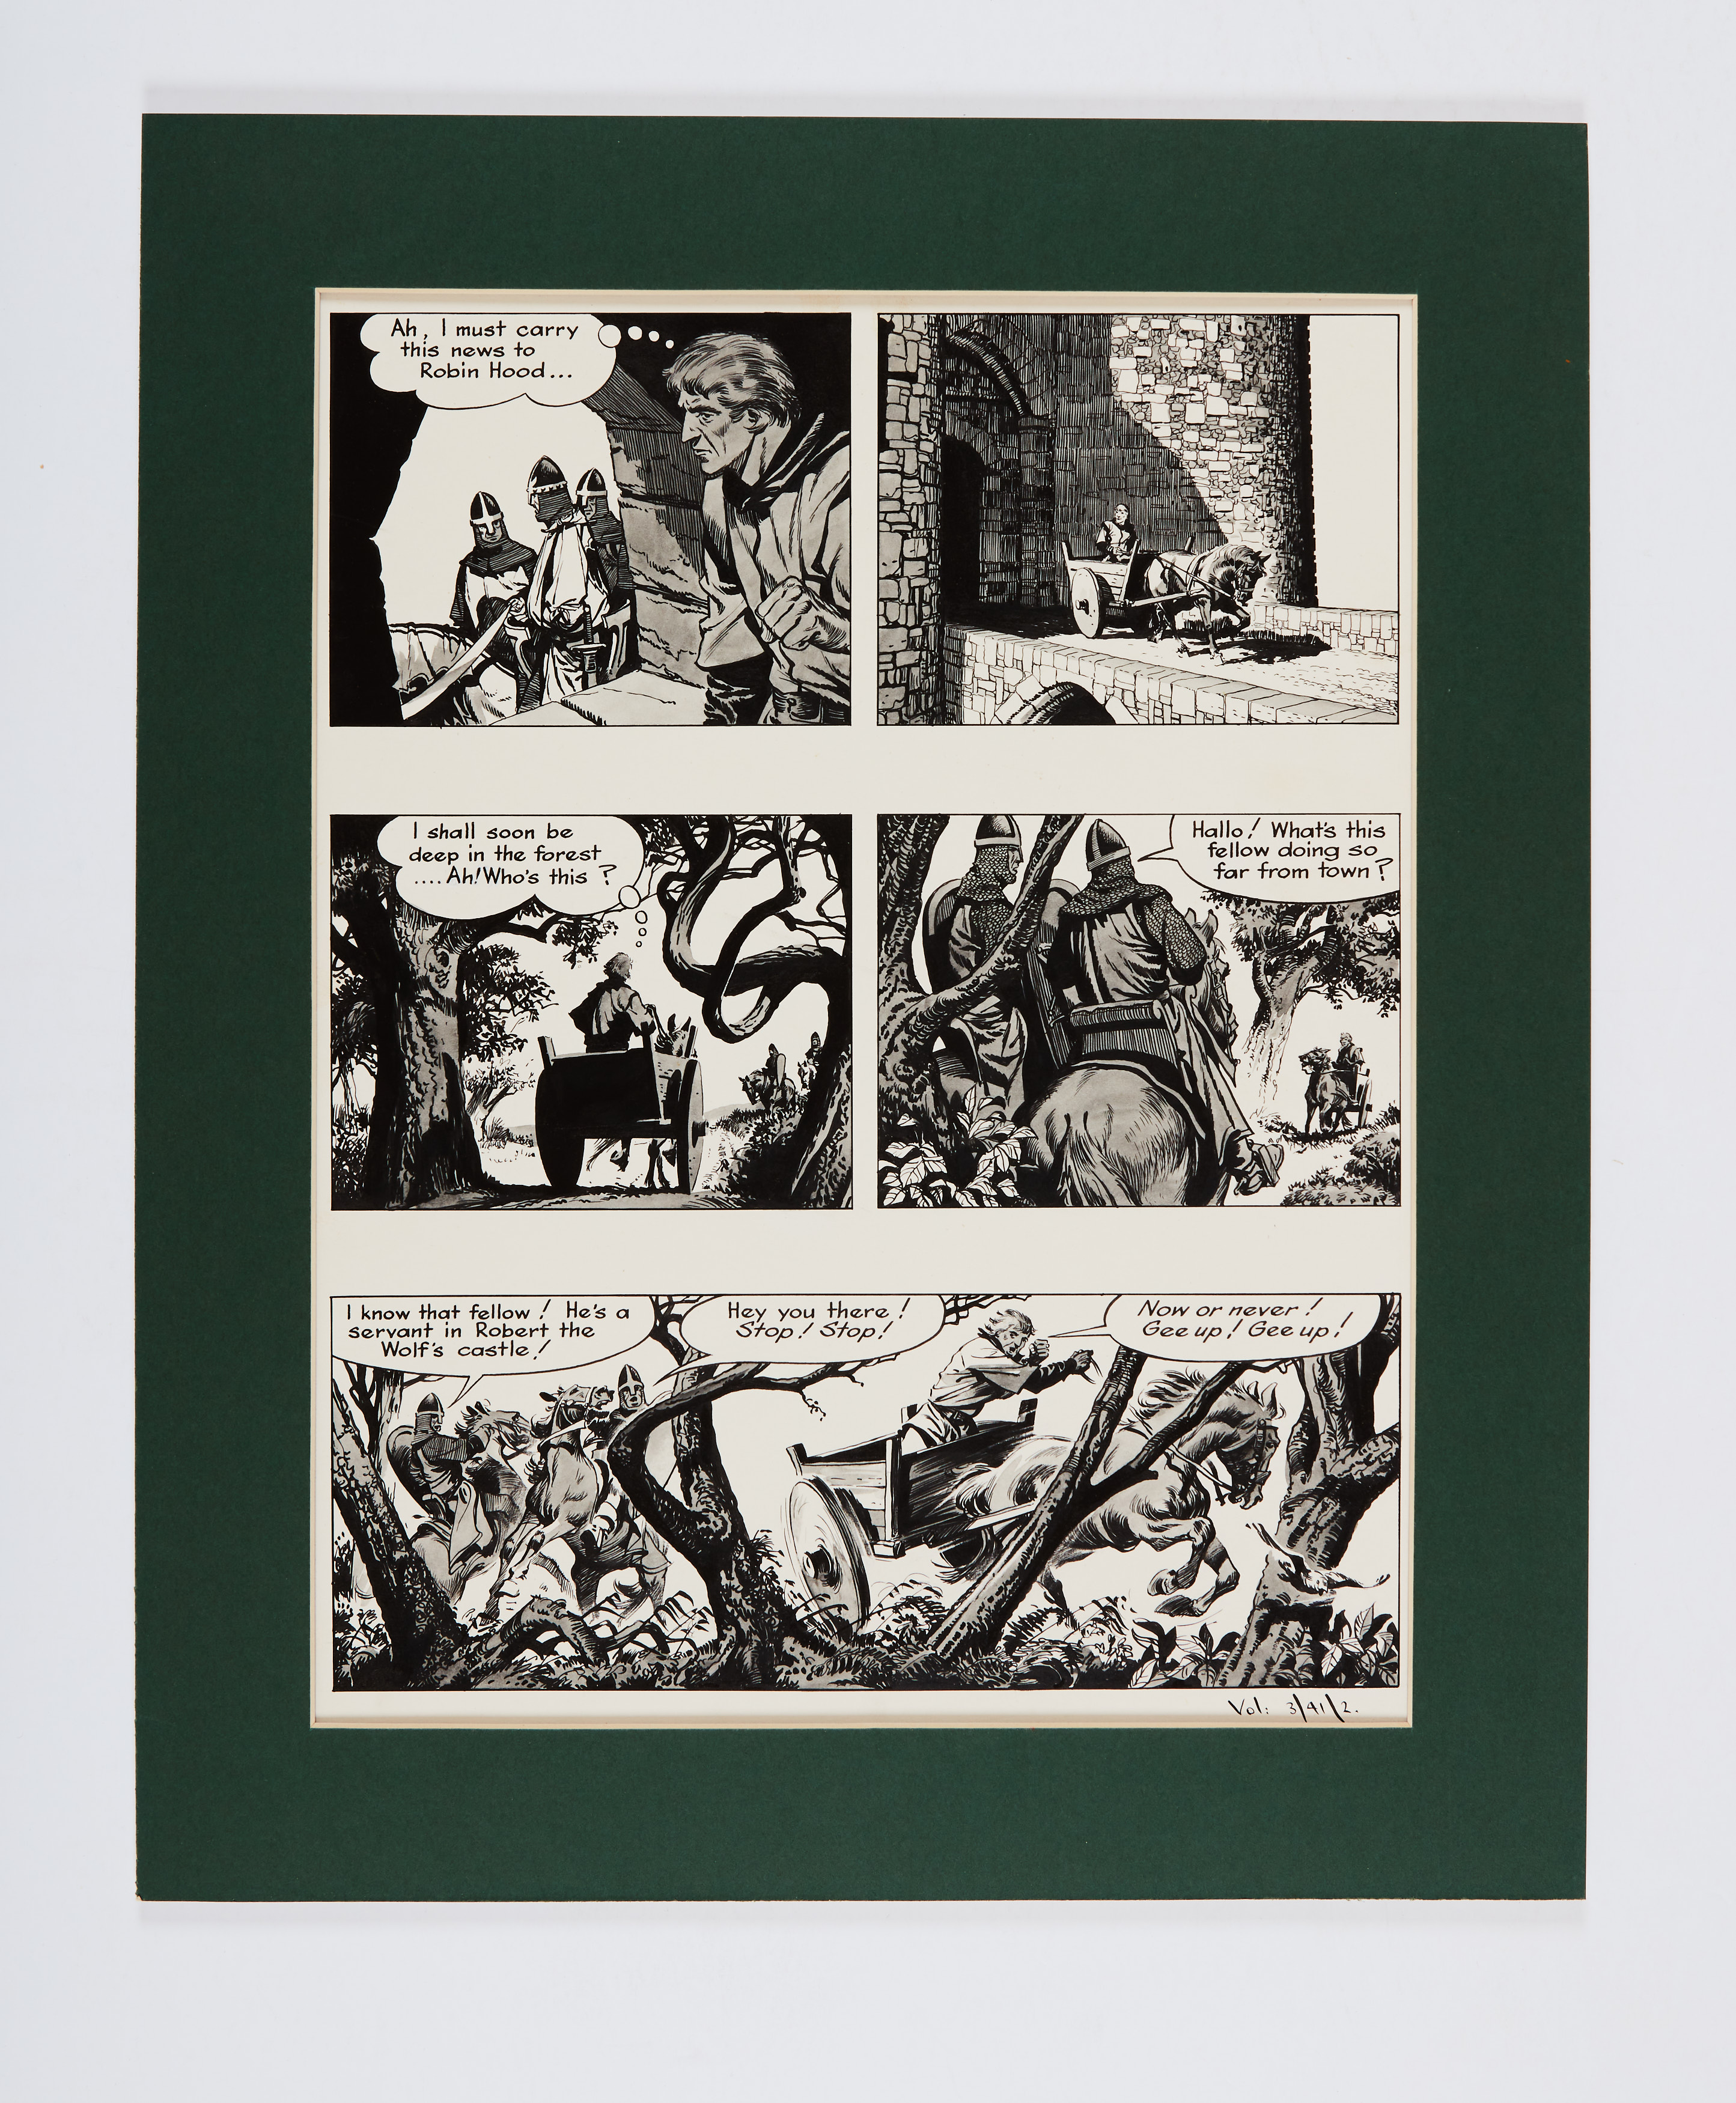 Robin Hood original artwork (1956) by Frank Bellamy for Swift Vol. 3, No 41 pg 2 (1956). Black ink